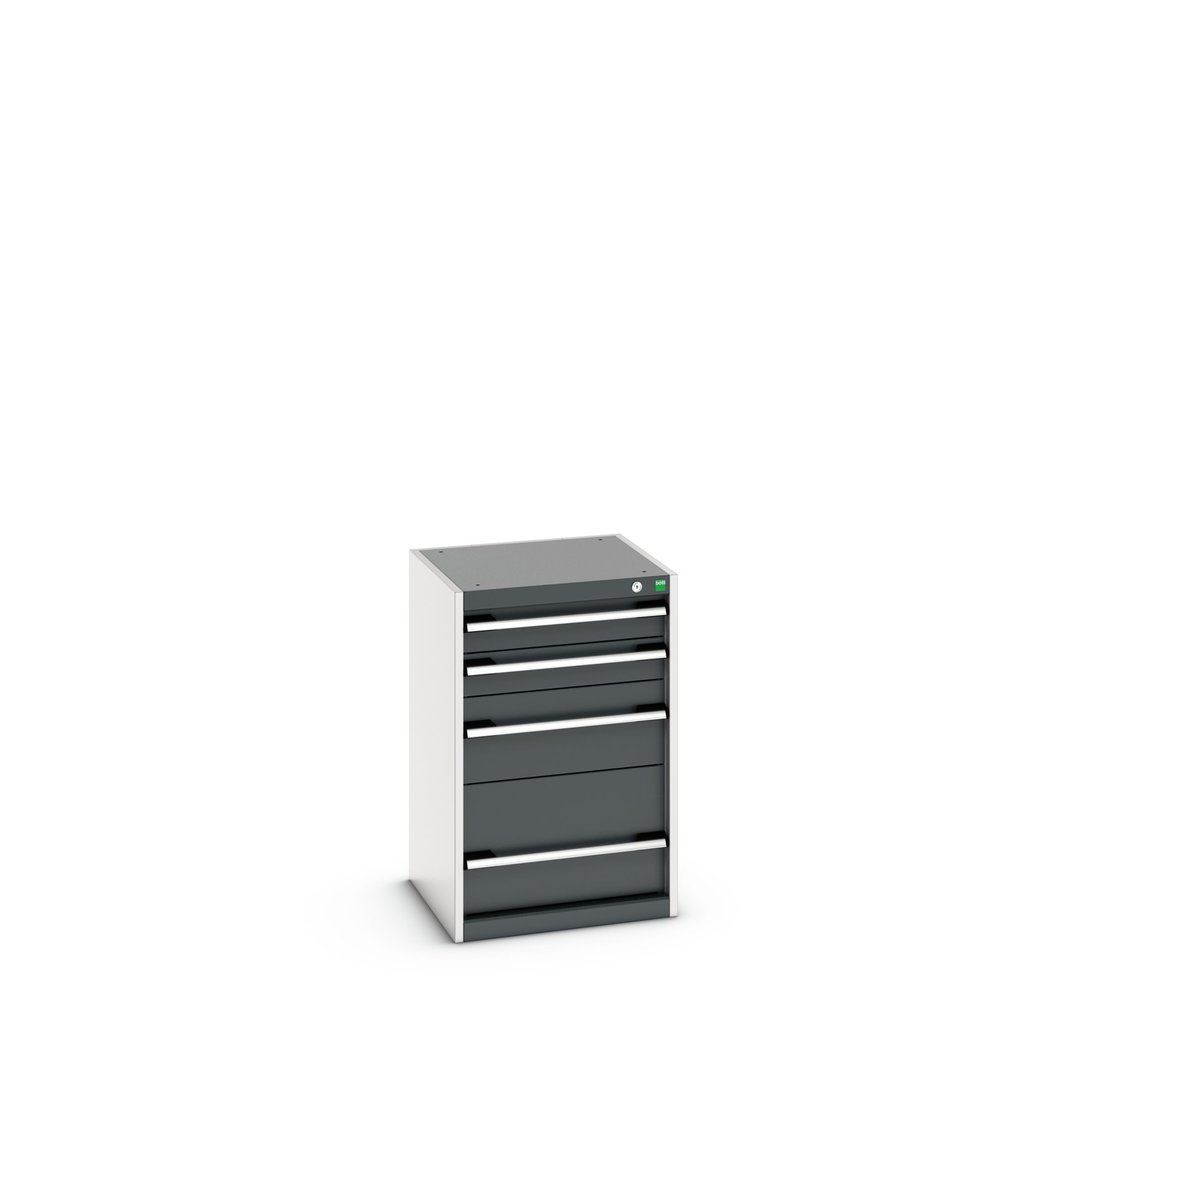 40010025. - cubio drawer cabinet